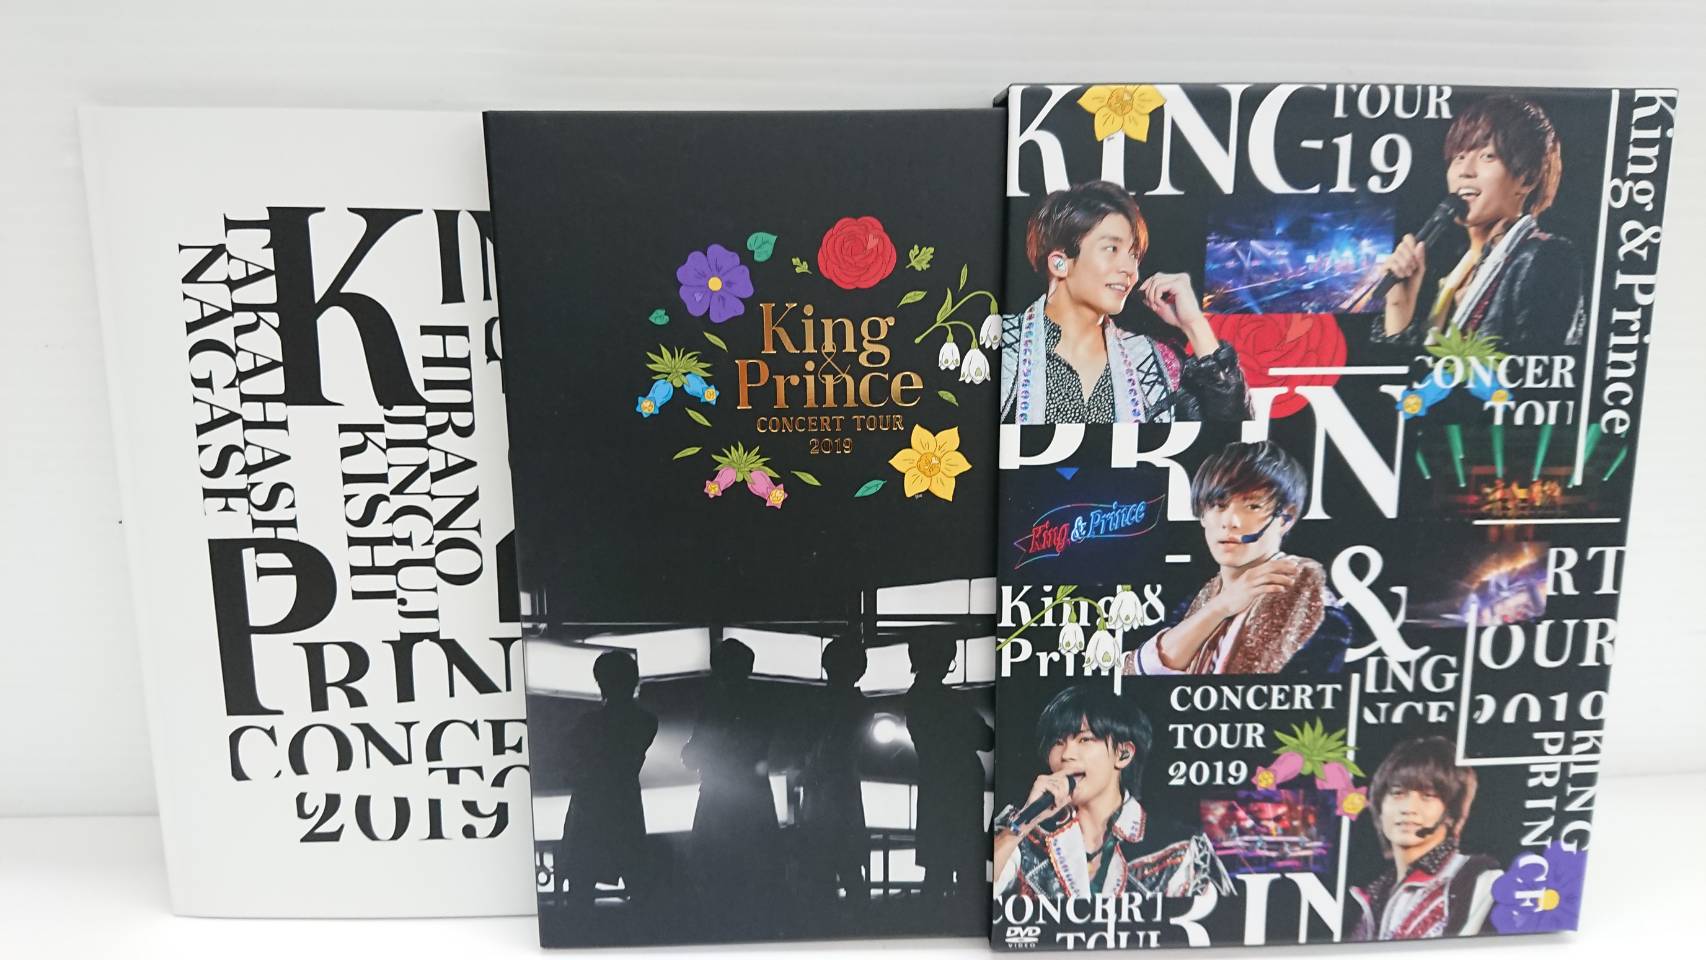 「King & Prince CONCERT TOUR 2019」の各会場の画像・座席表まとめ